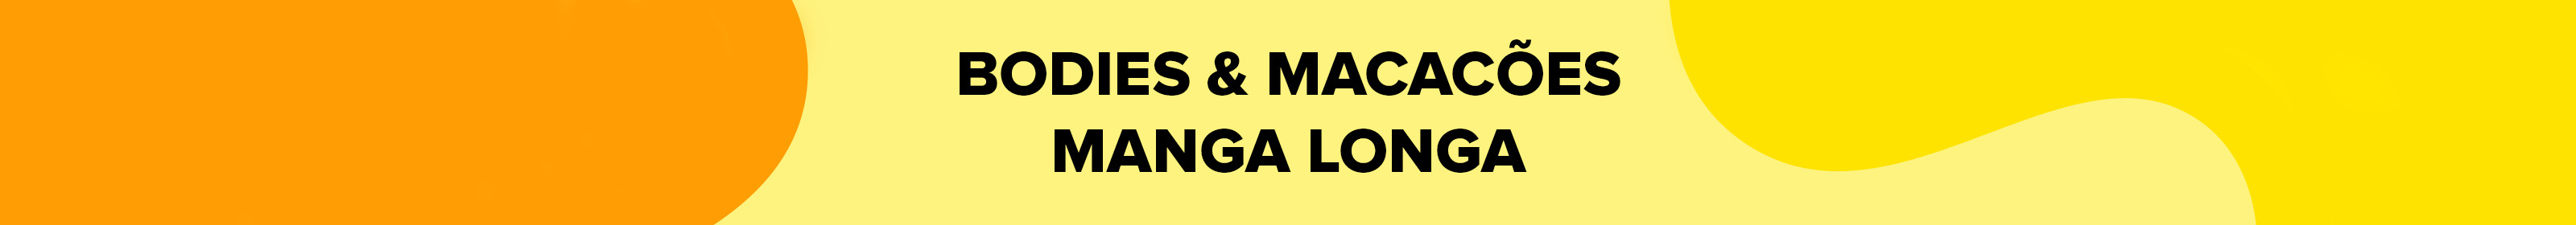 Bodies & Macacões Manga Longa